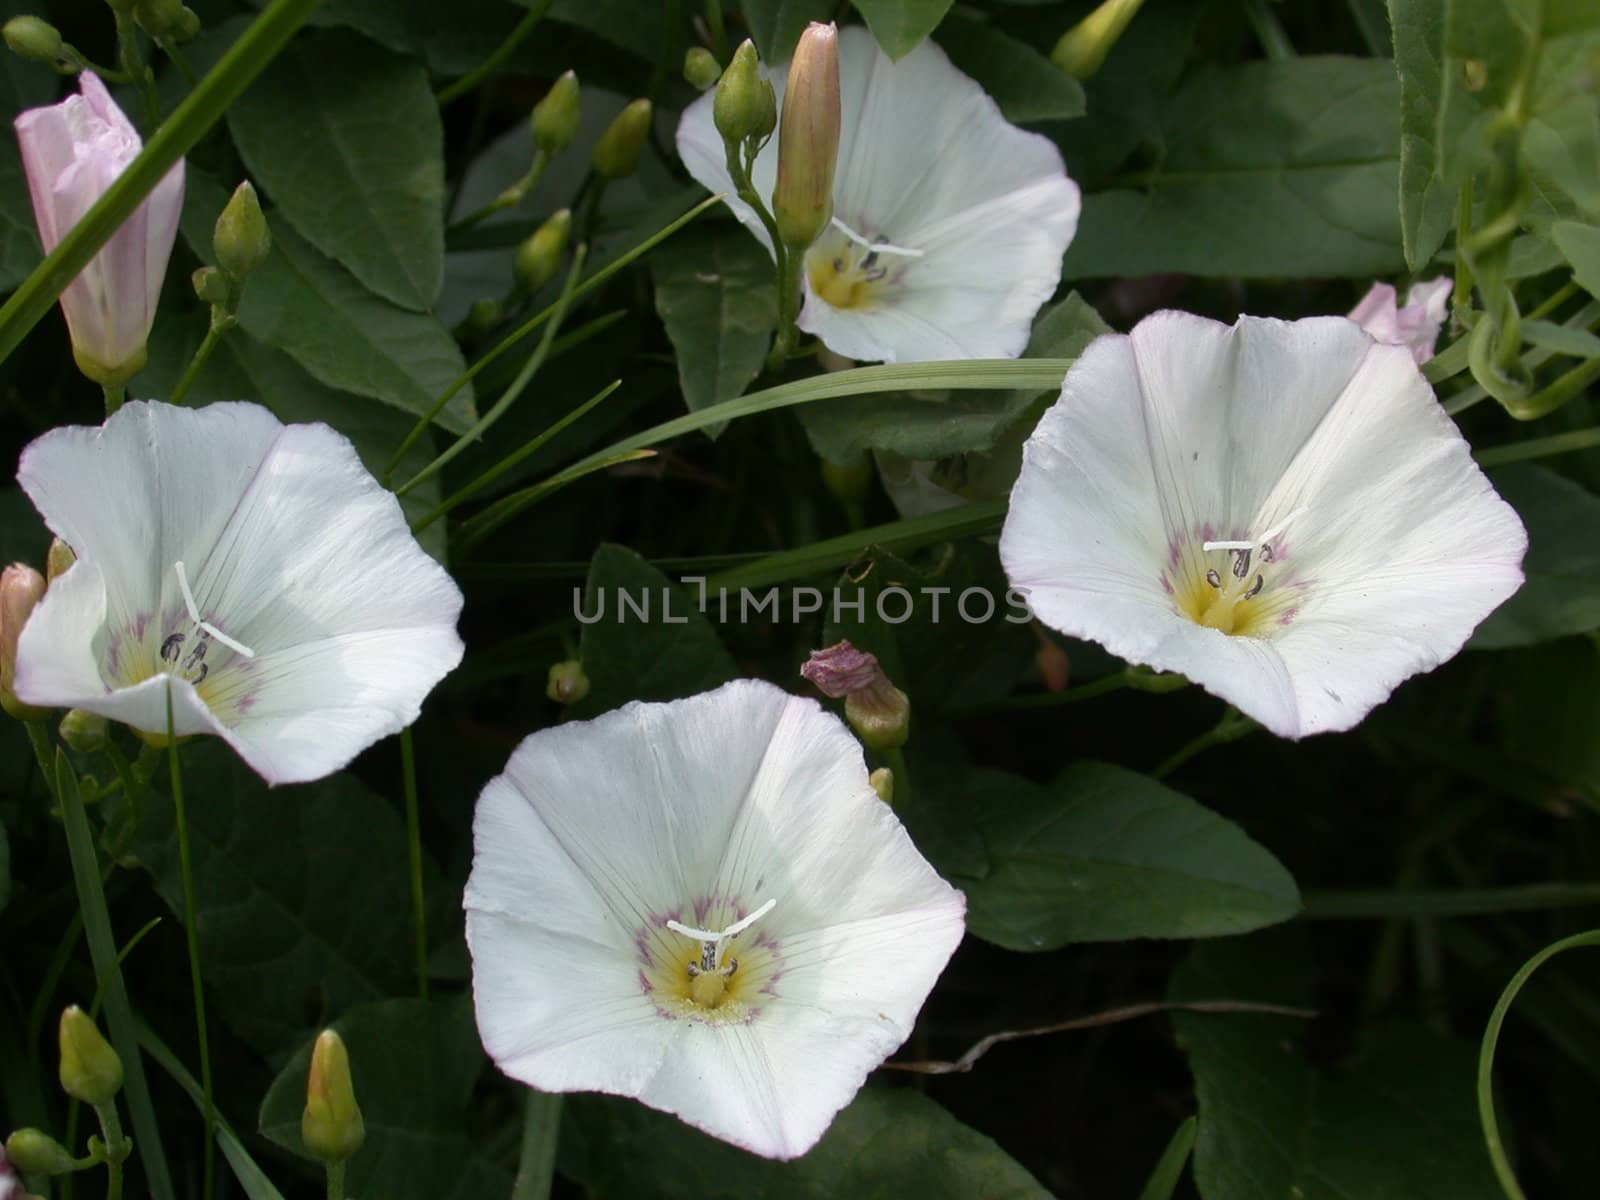 The white flowers macro, nature